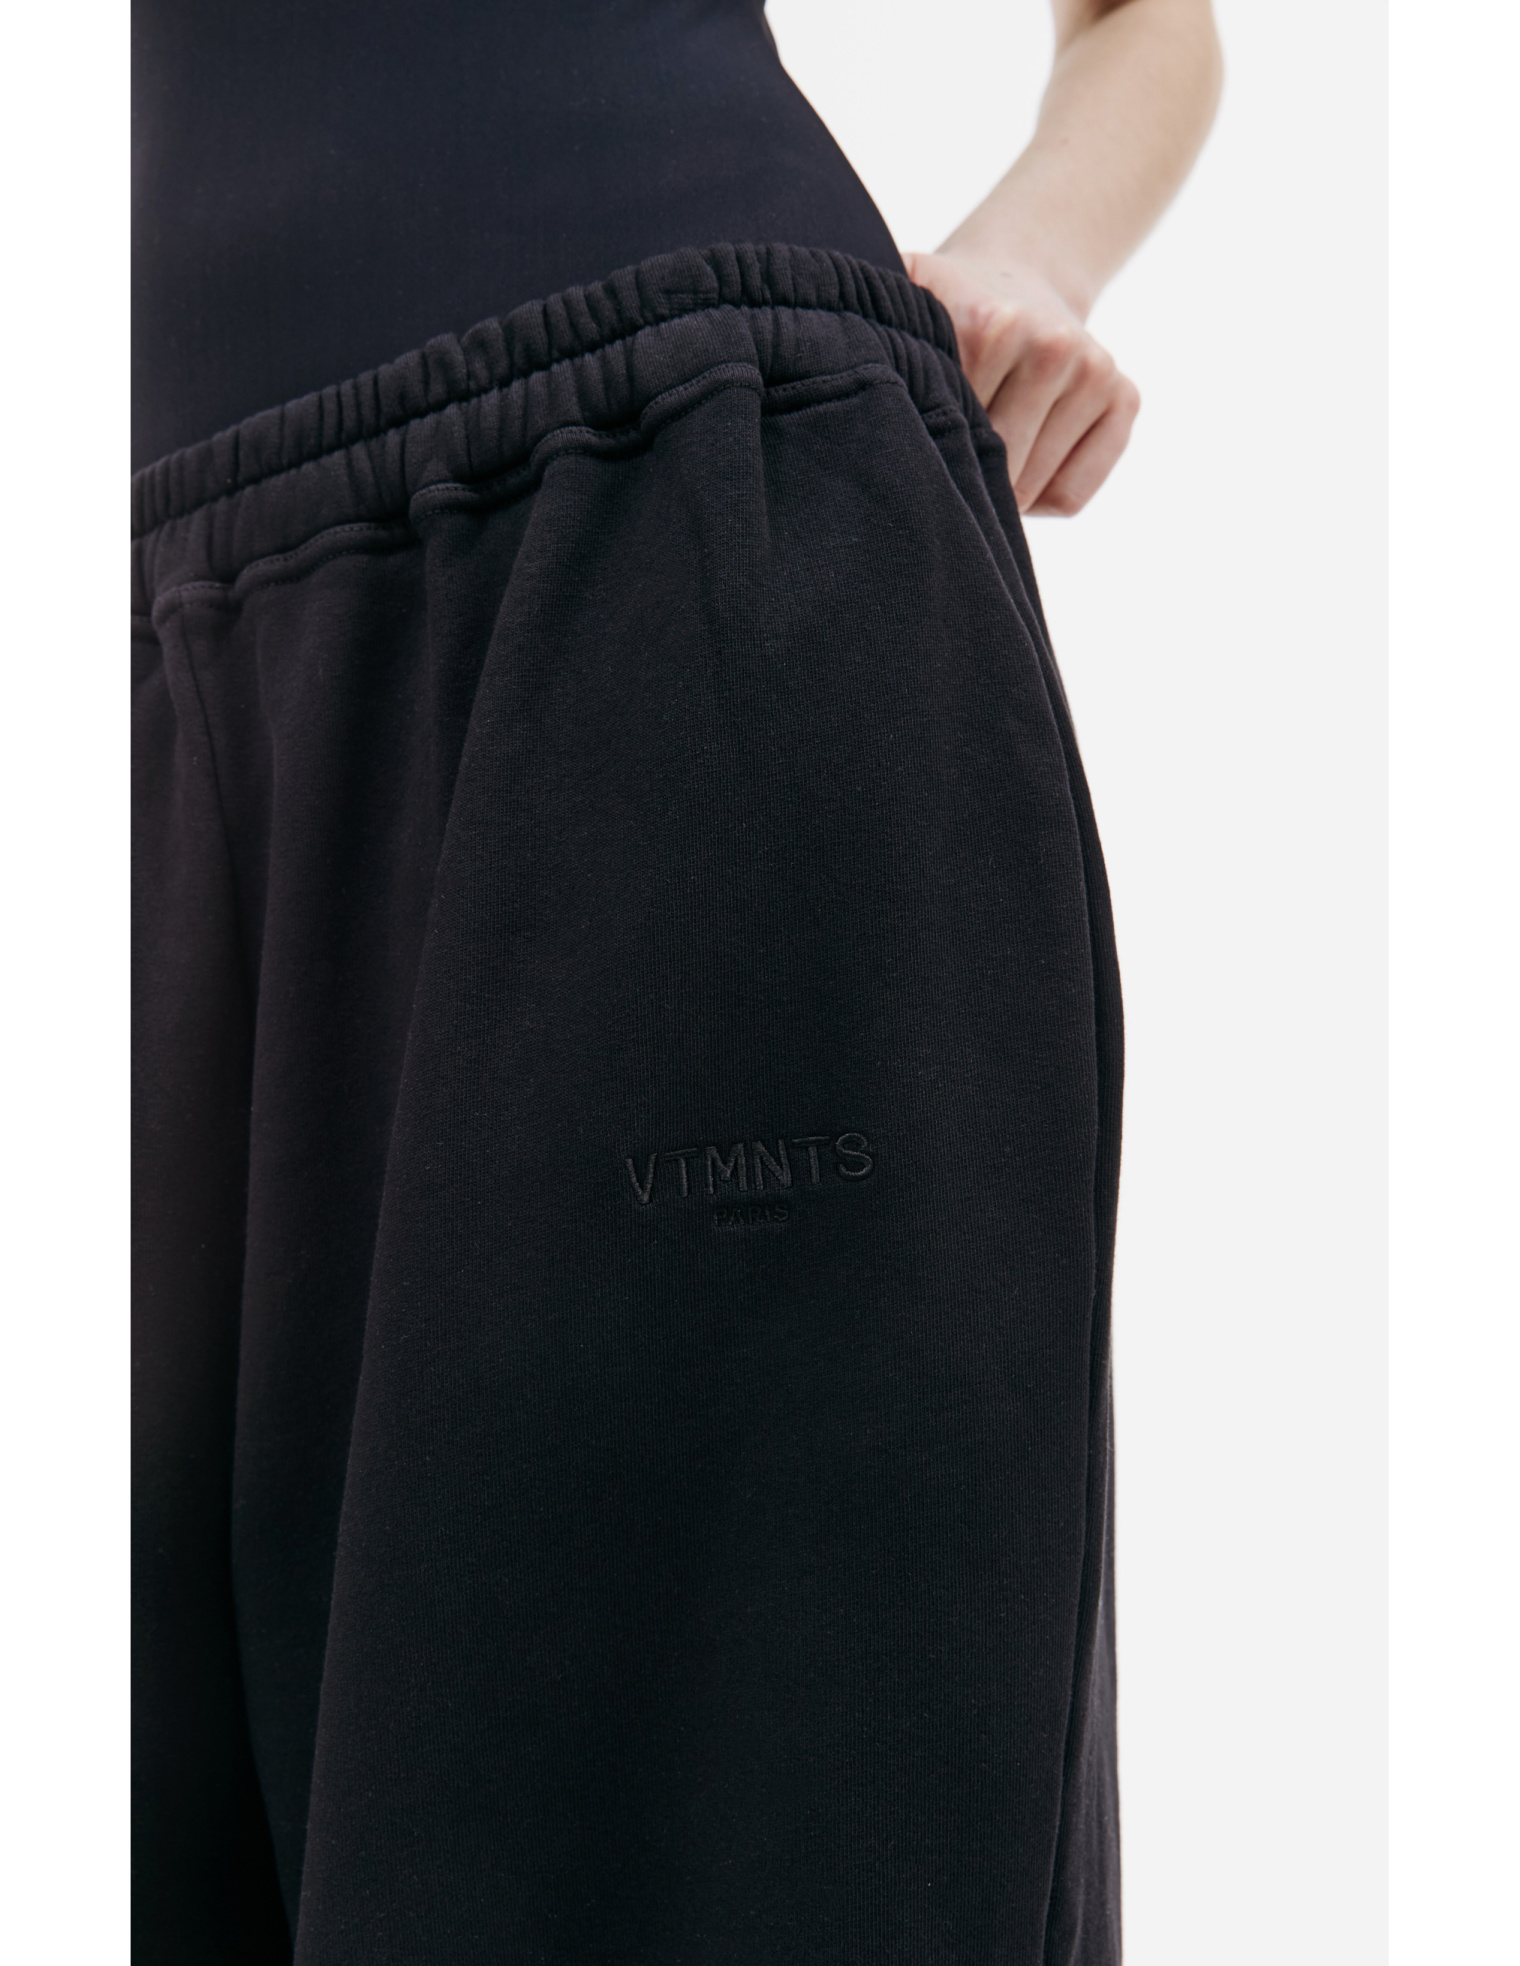 VTMNTS Black Embroidered Sweatpants